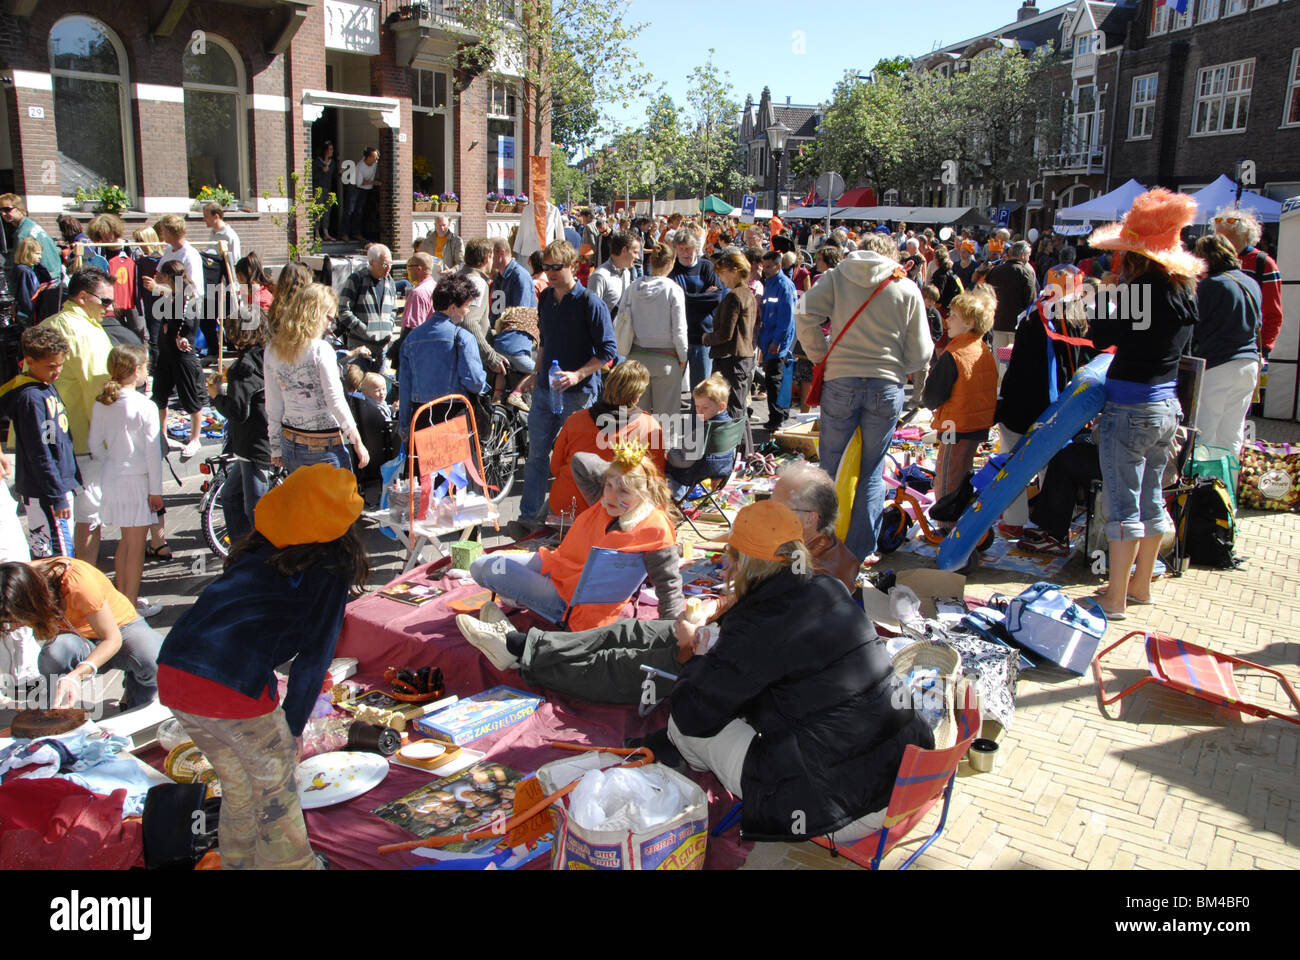 Koninginnedag Amsterdam queensday 30 april crowd festive free market people young group children flea market Stock Photo